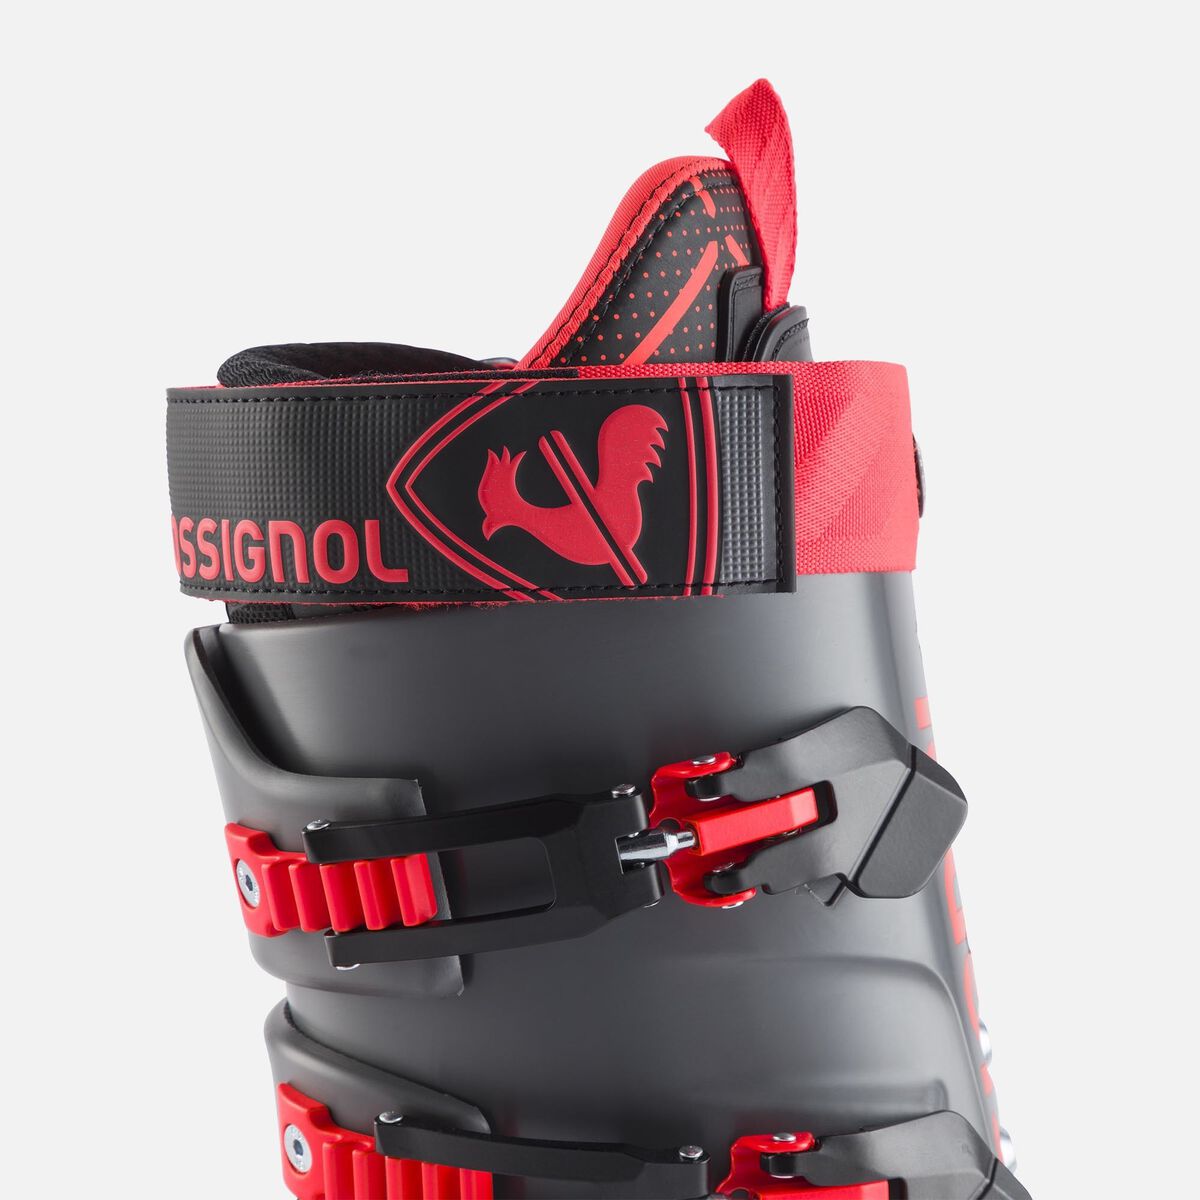 Chaussures de ski Racing unisexe Hero World Cup Z Soft +